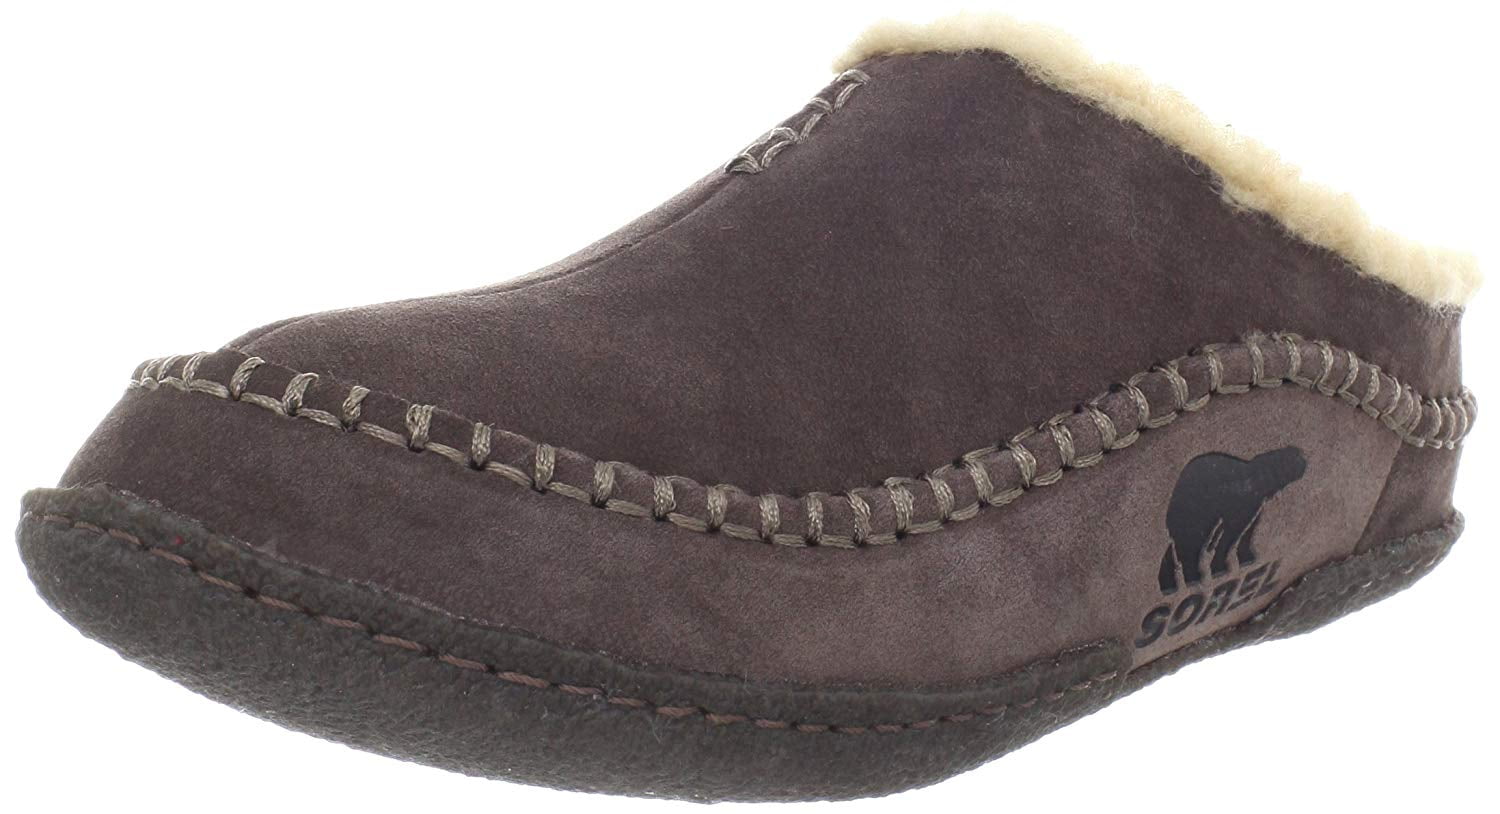 men's ridge slippers - Walmart.com